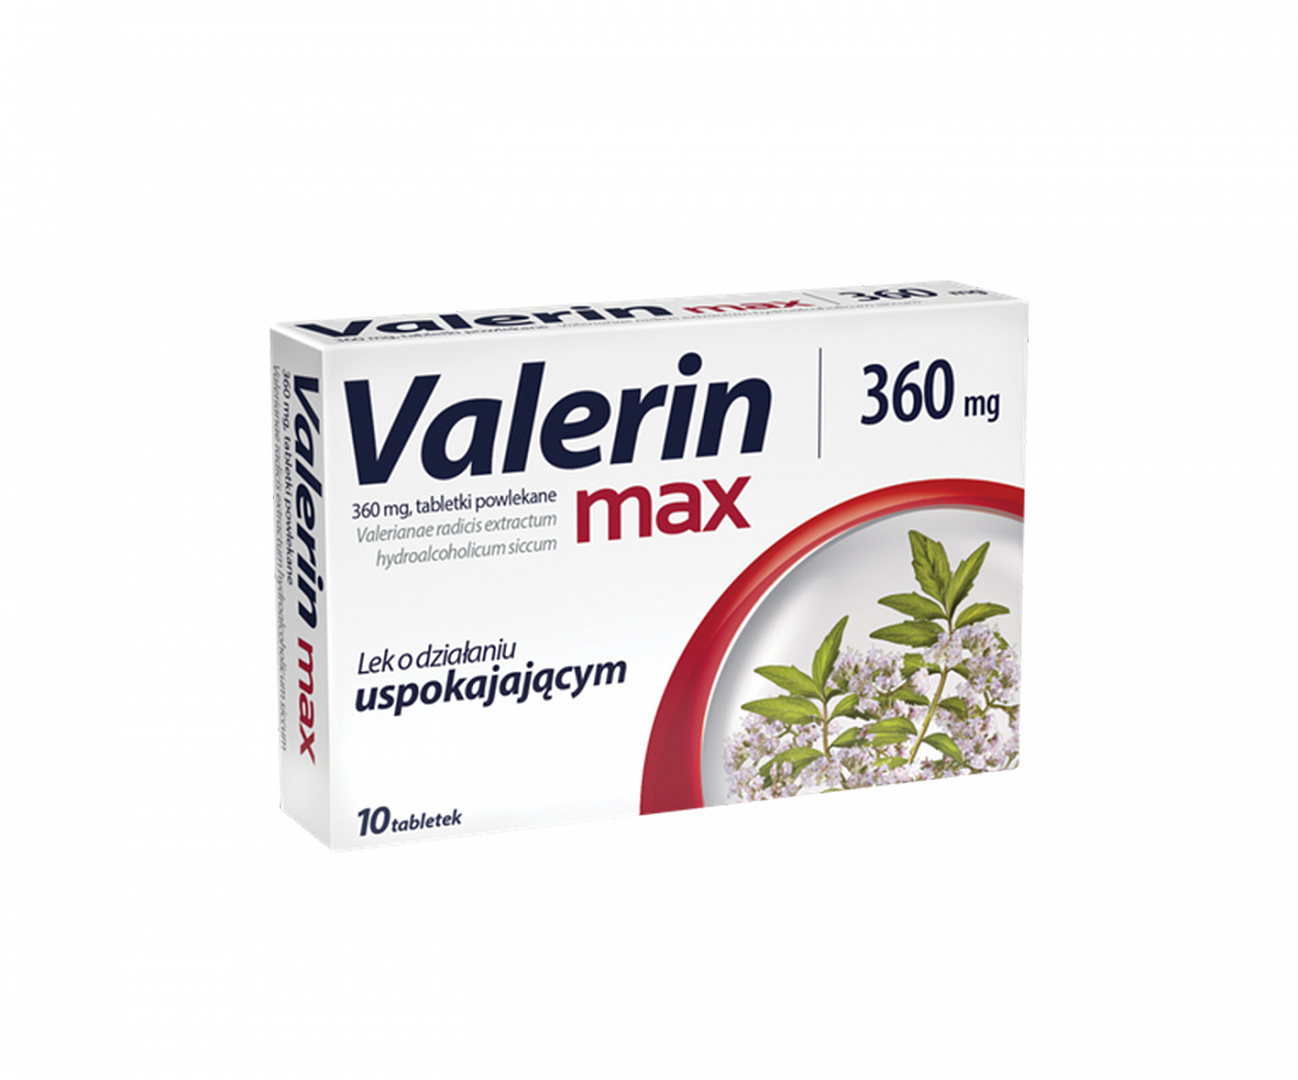 Aflofarm, Valerin Max, tablety proti stresu s uklidňujícím účinkem